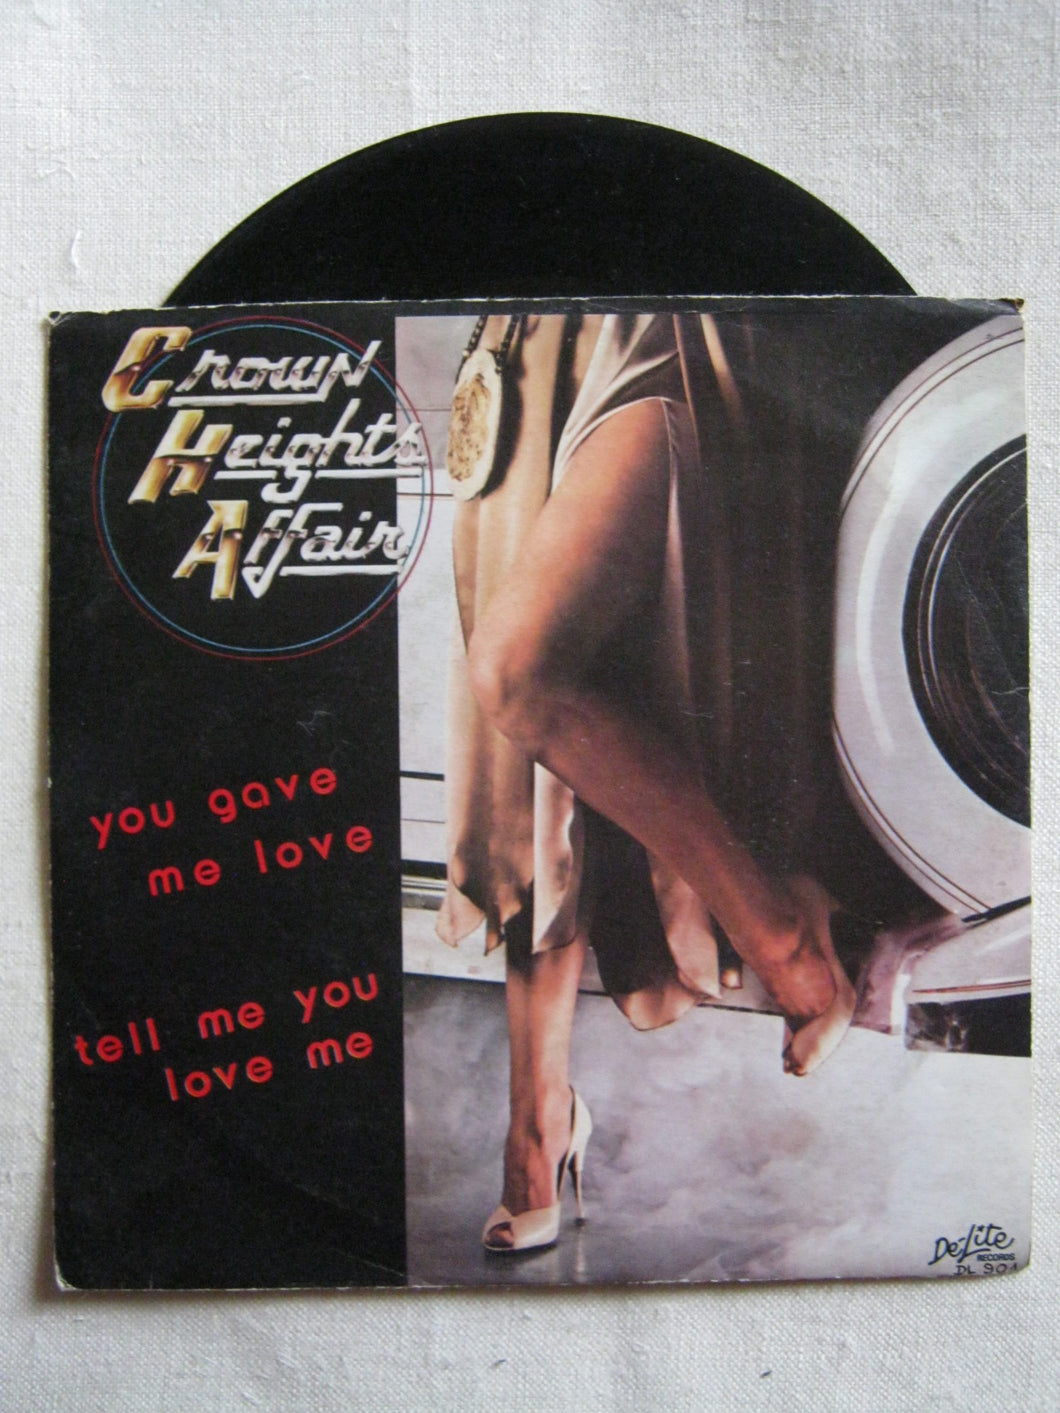 45 giri - 7'' - Crown Heights Affair - You Gave Me Love  - Tell Me You Love Me